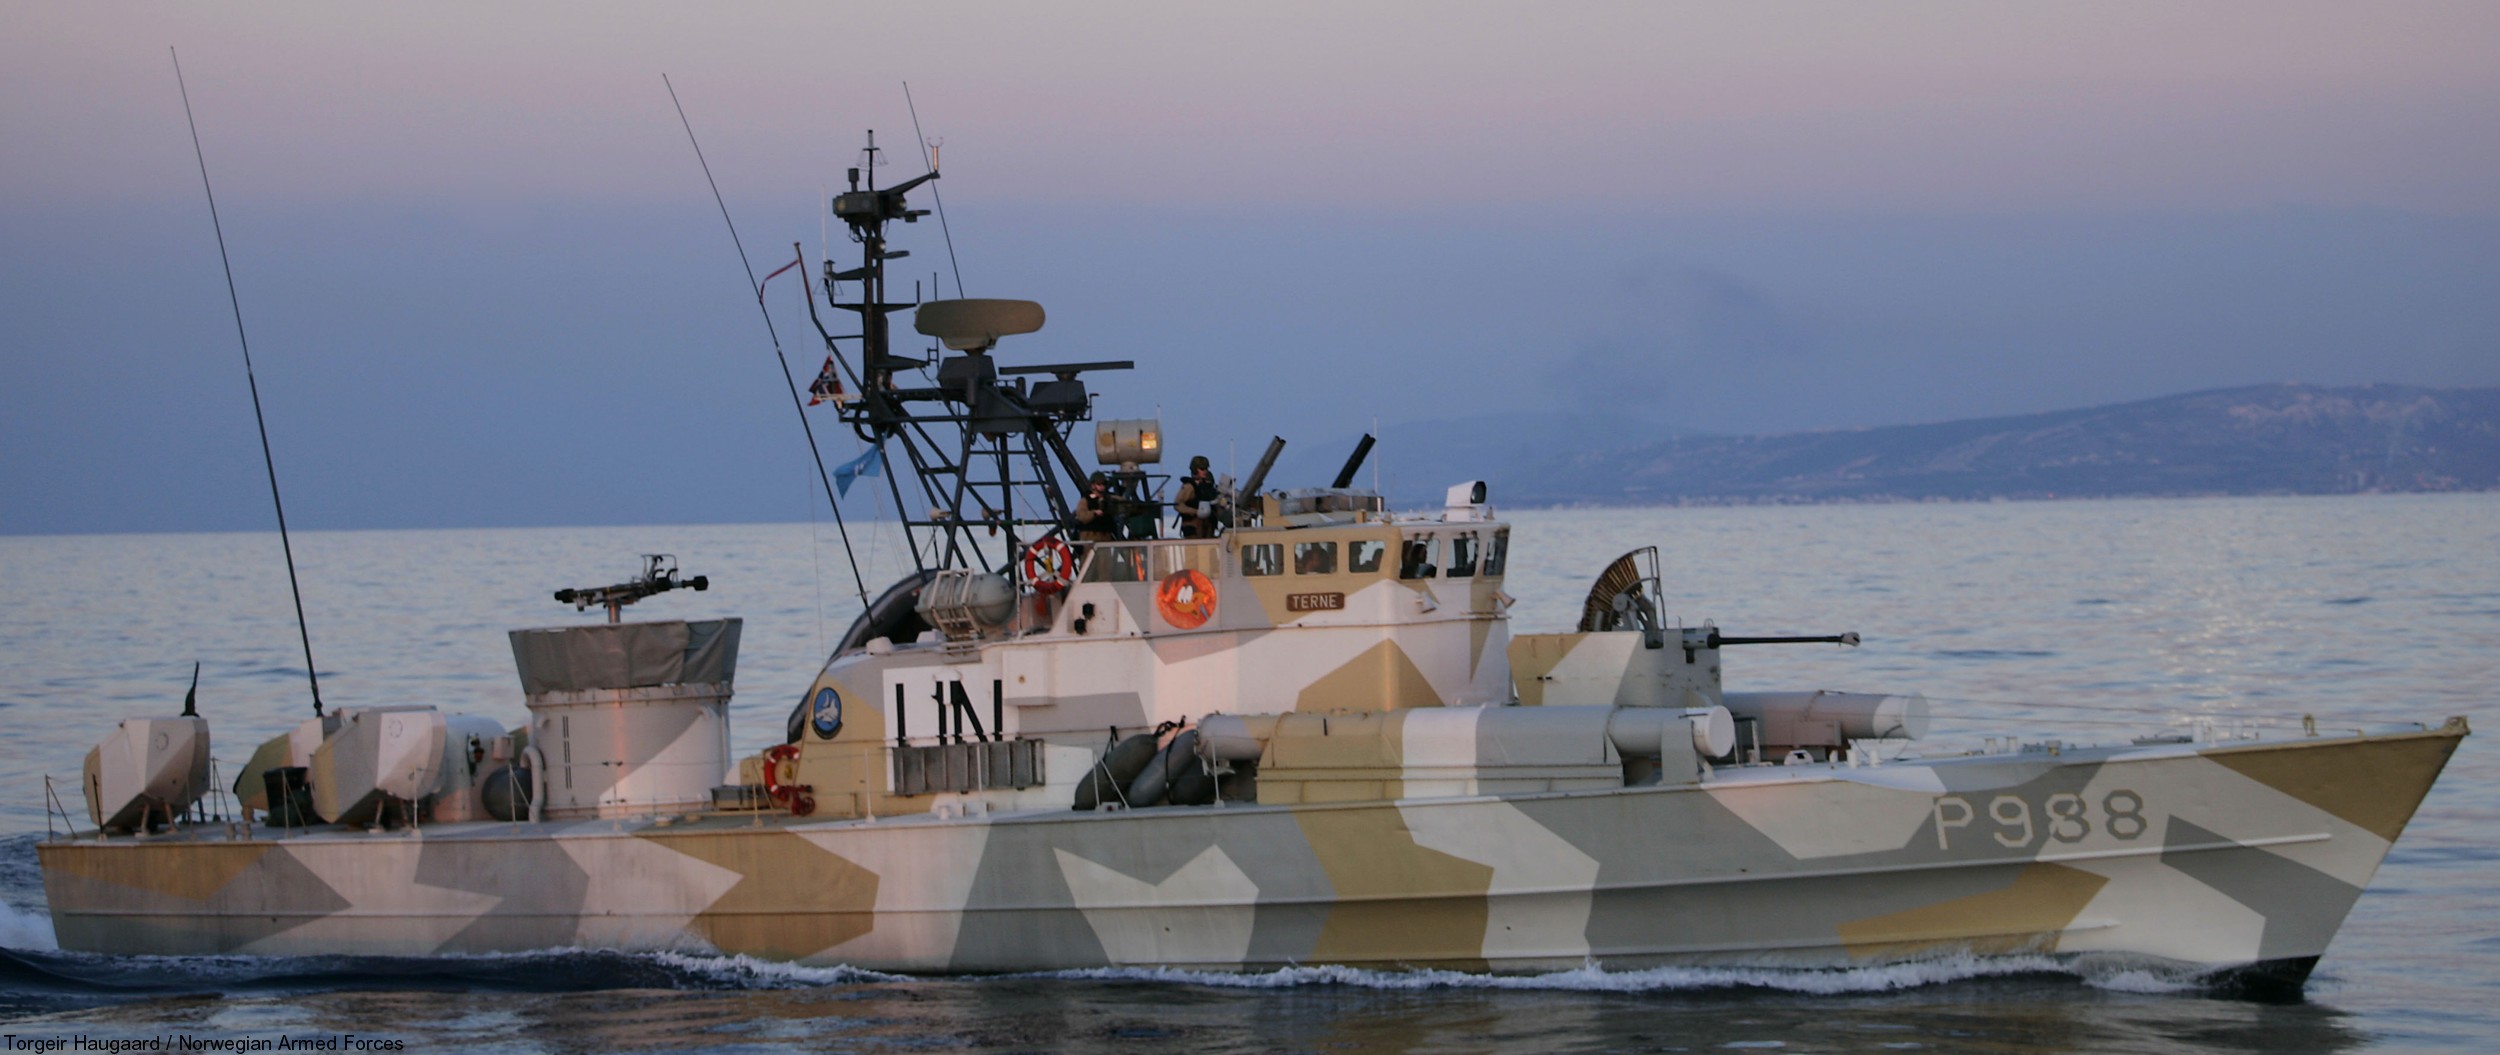 p-988 knm terne hauk class fast attack missile torpedo craft boat norwegian navy sjøforsvaret 03